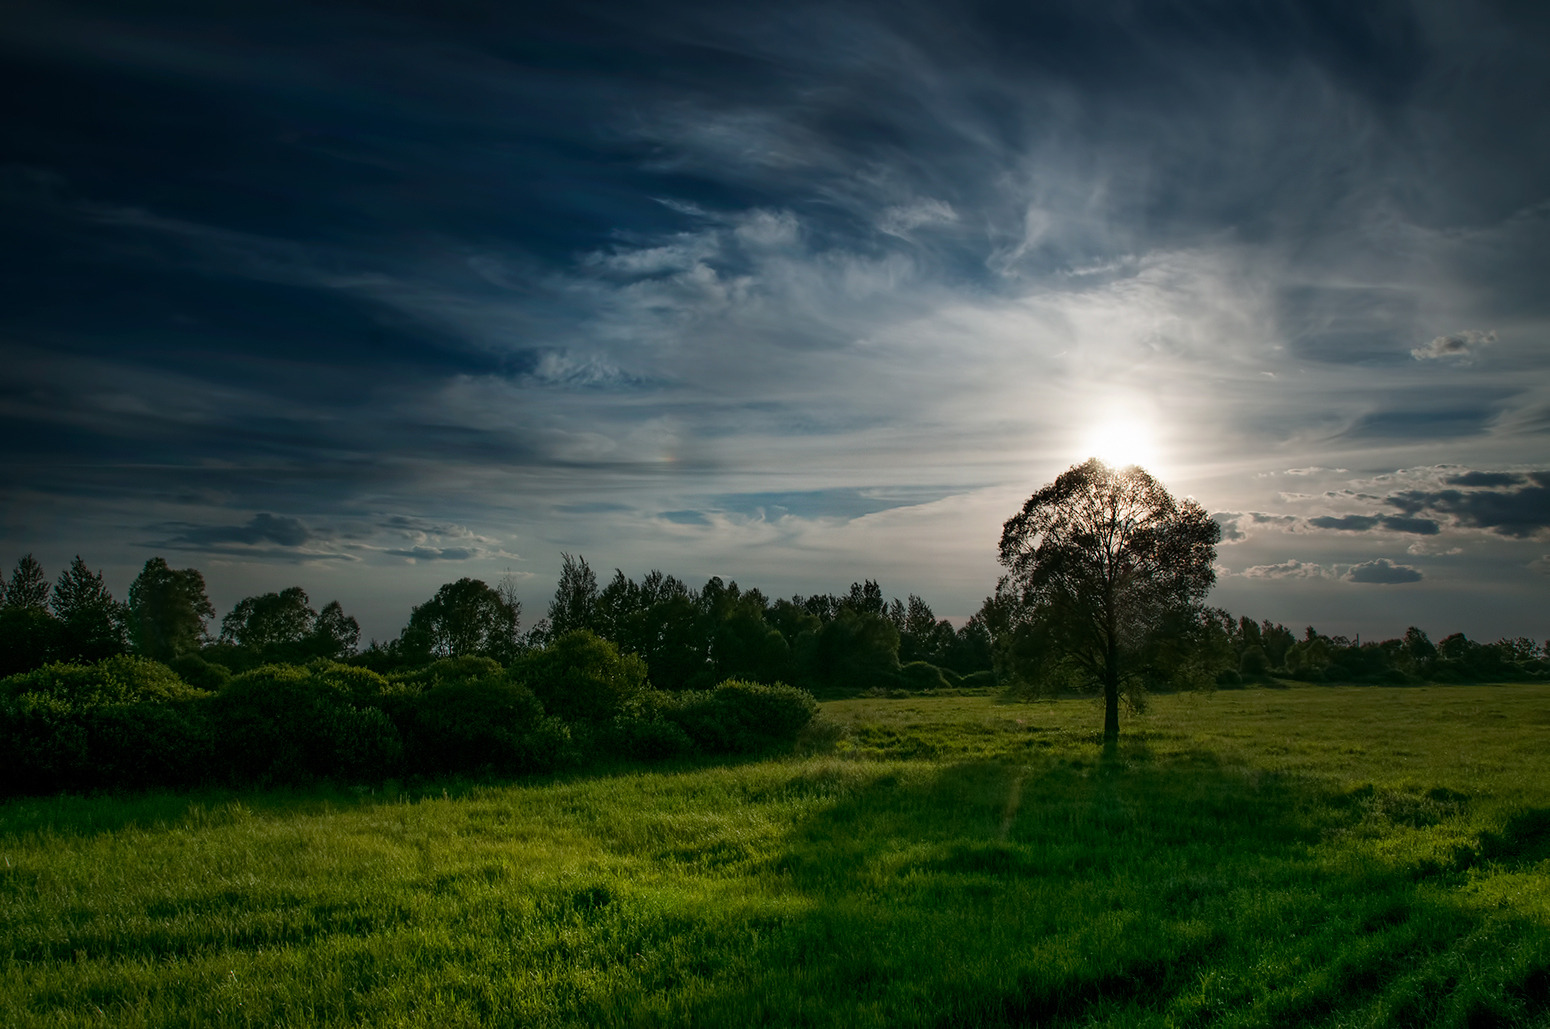 Один в поле | Фотограф Александр Шатохин | foto.by фото.бай